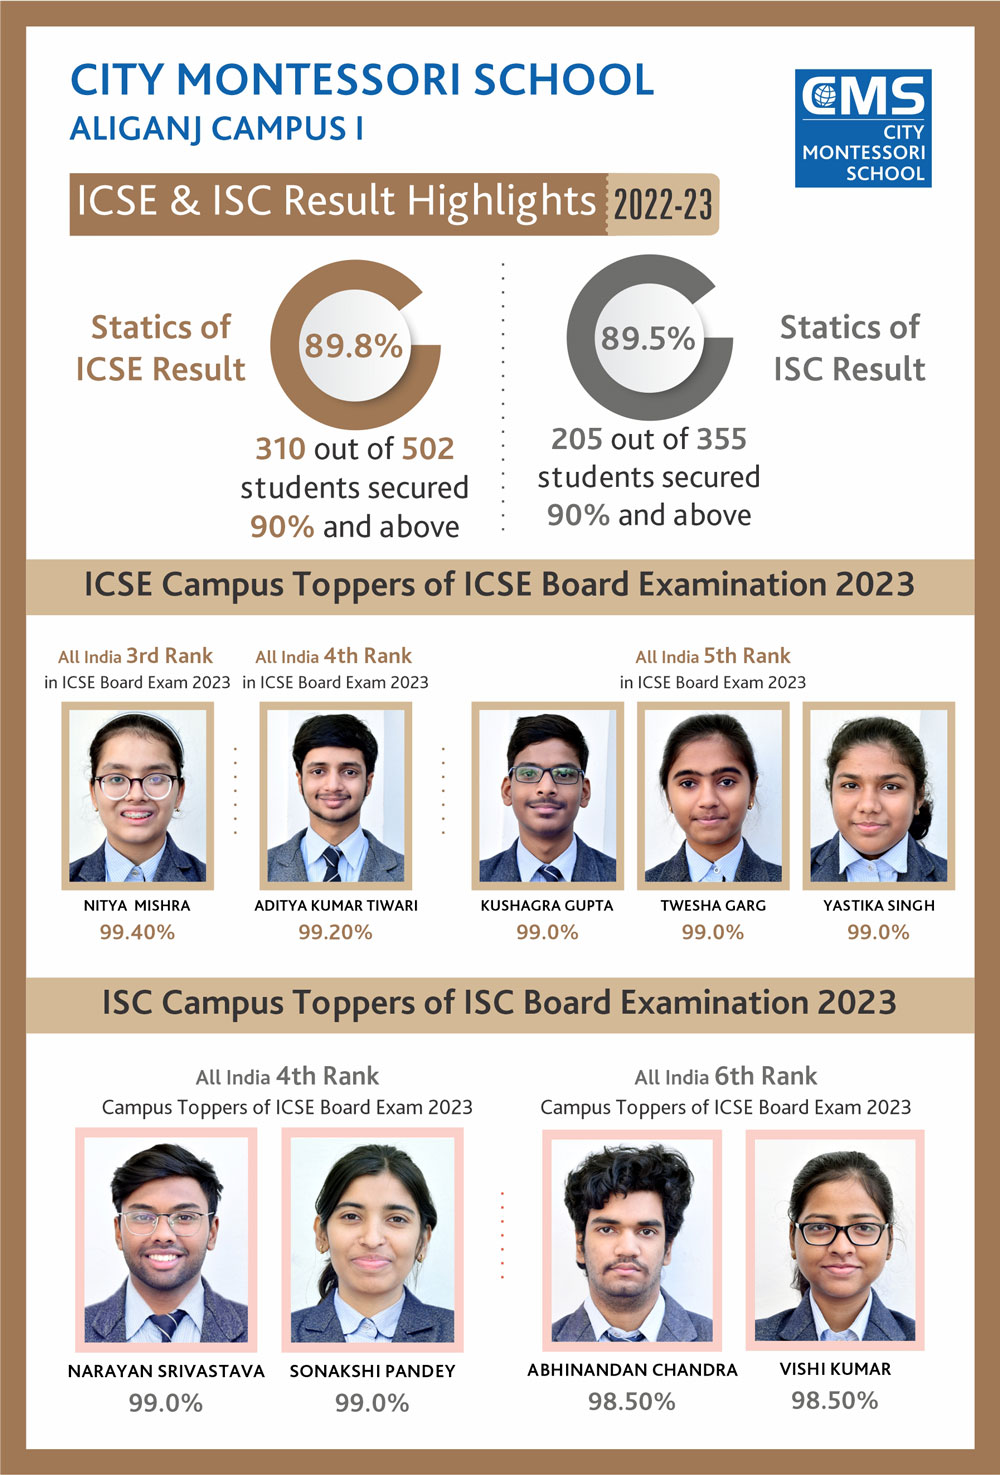 Cambridge Exam Preparation. 90% of IIE Candidates Pass Last Exams